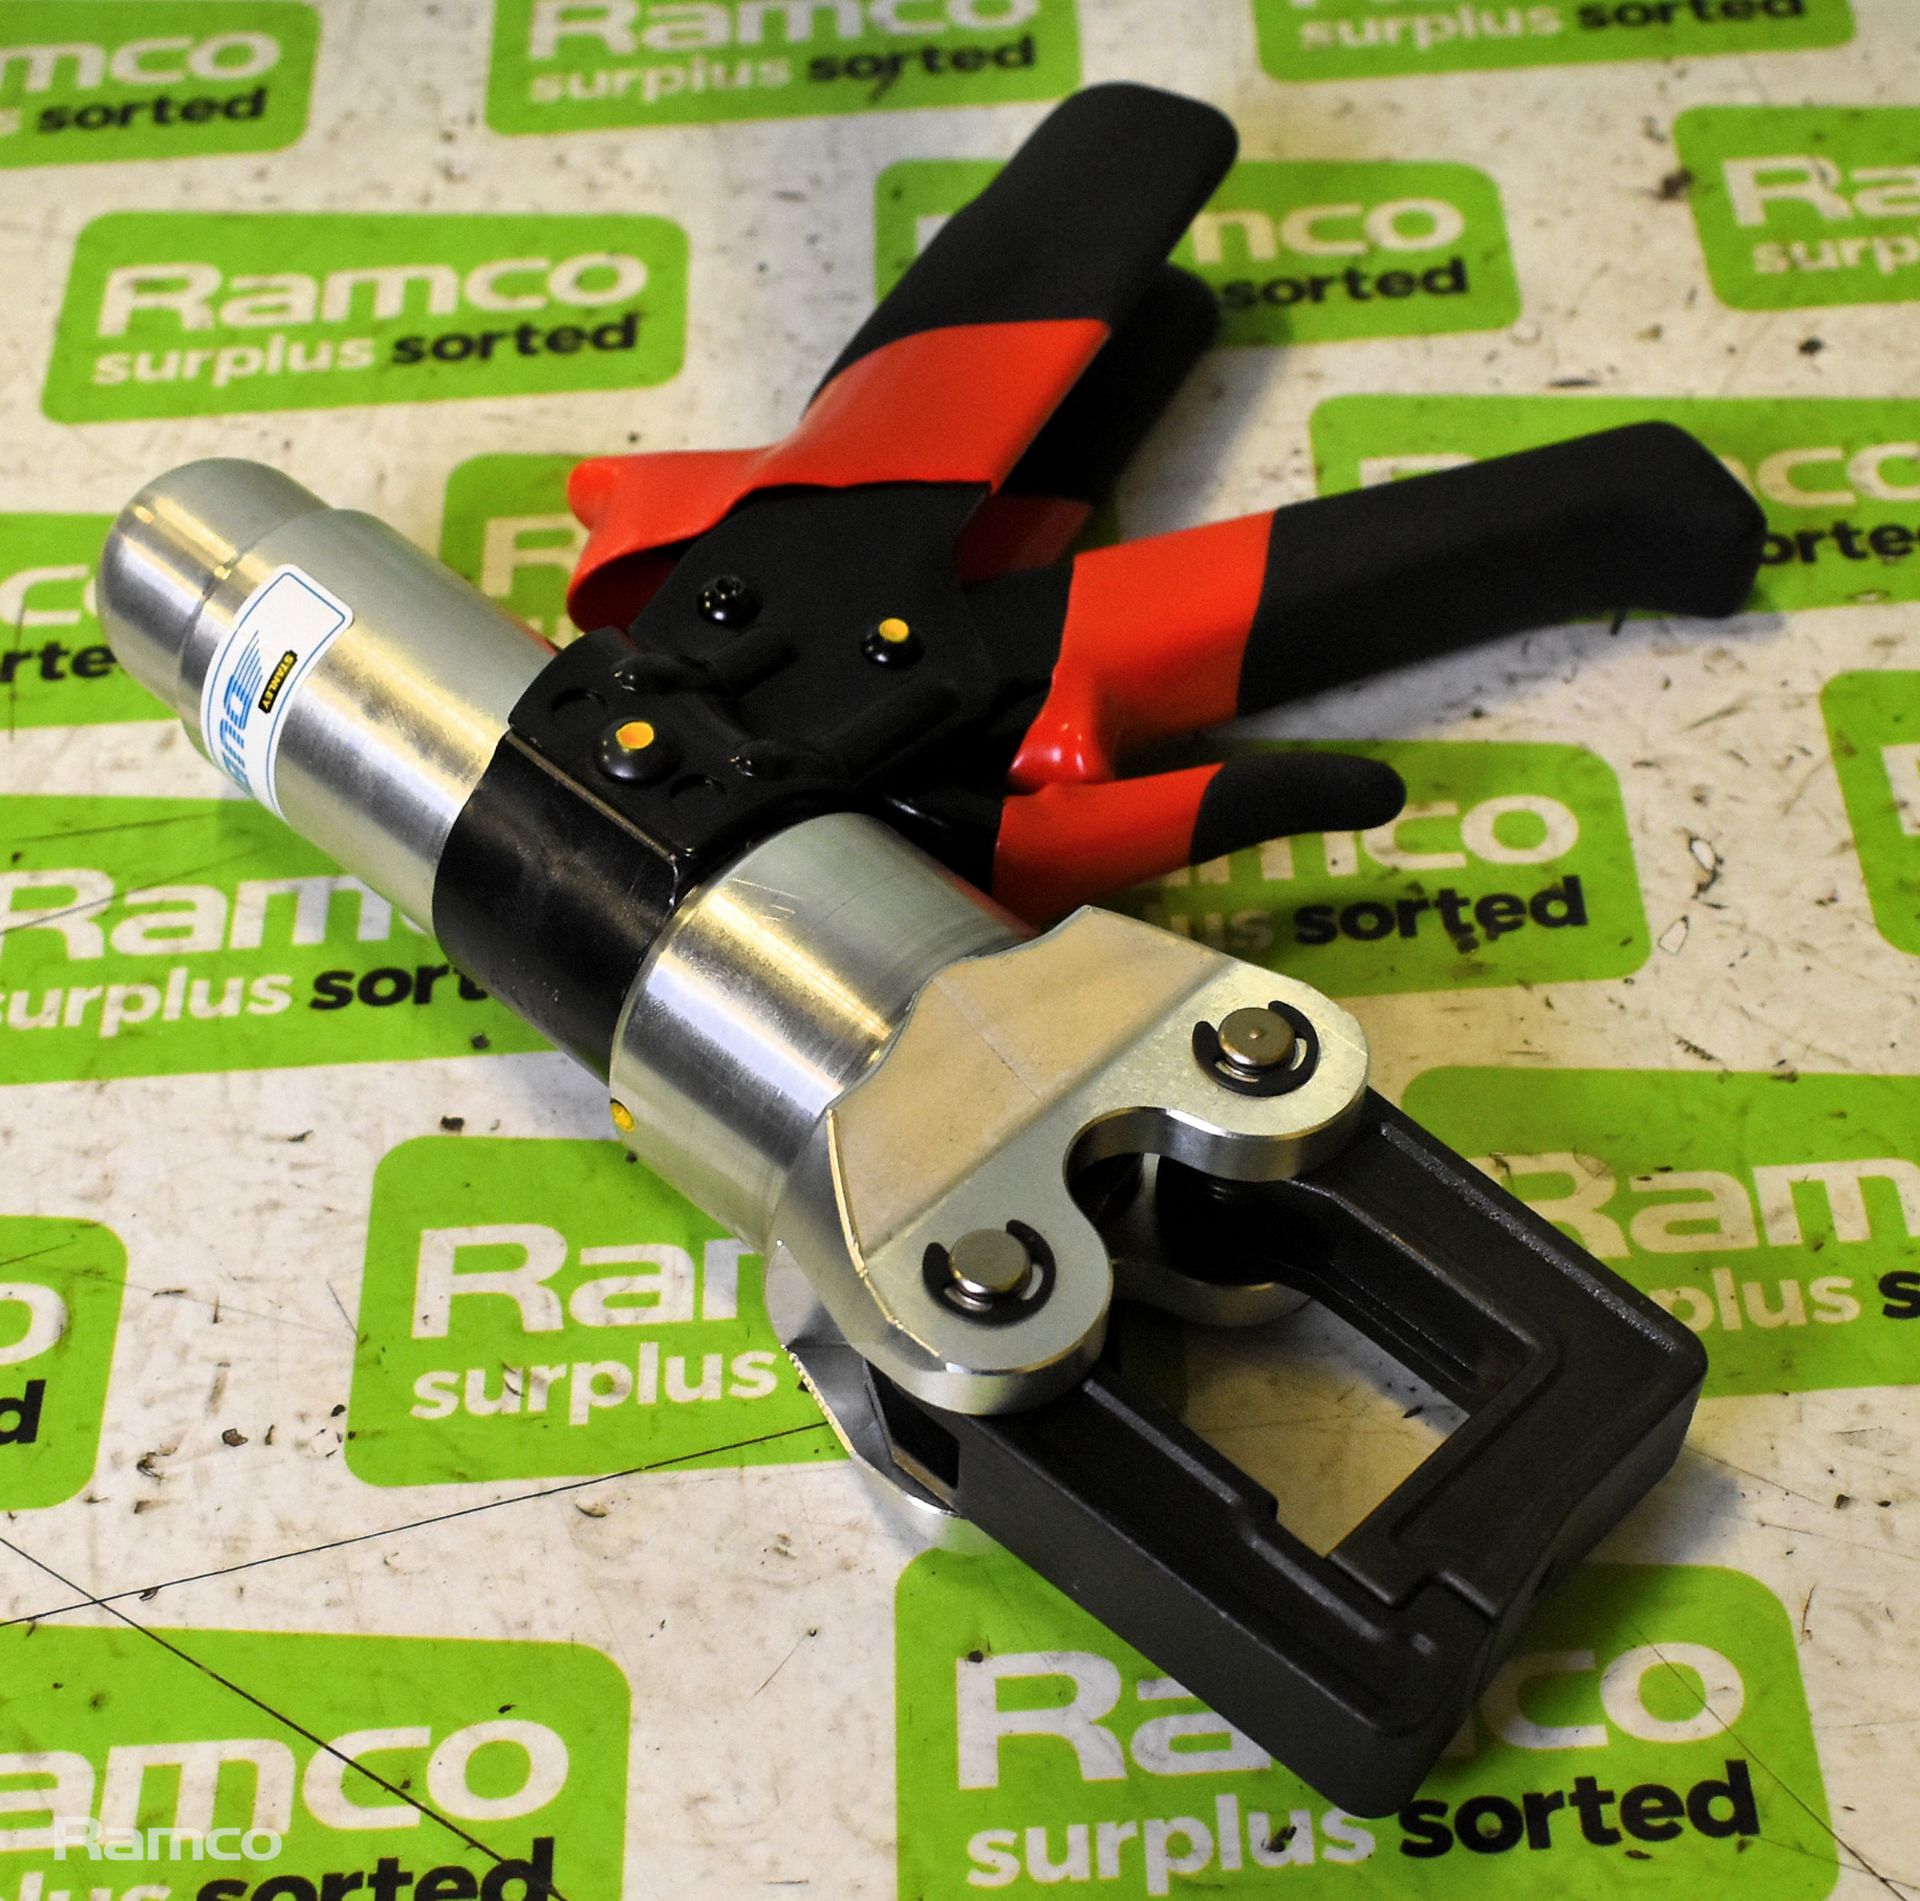 Glenair MRP0237 hand hydraulic crimping tool kit - Image 6 of 10